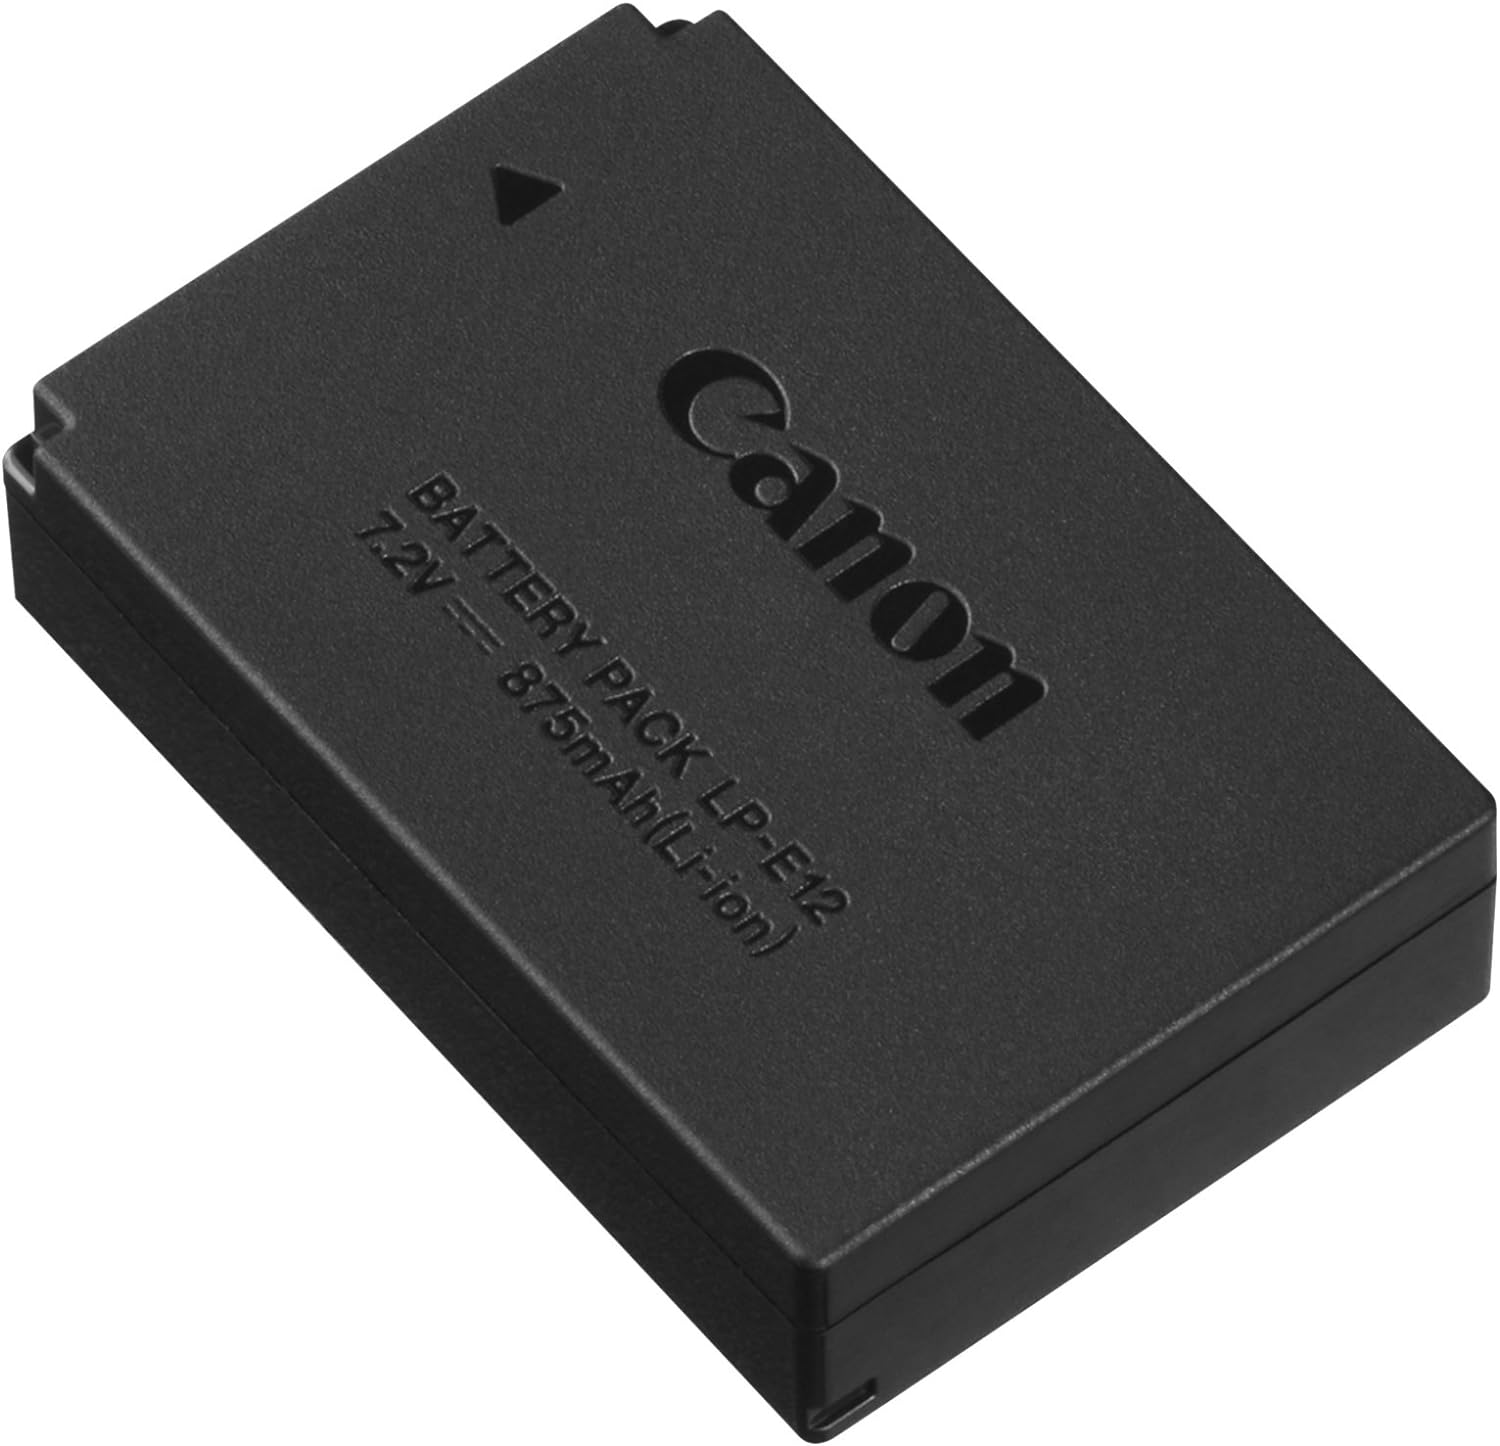 Canon LP-E12 Battery Pack - New